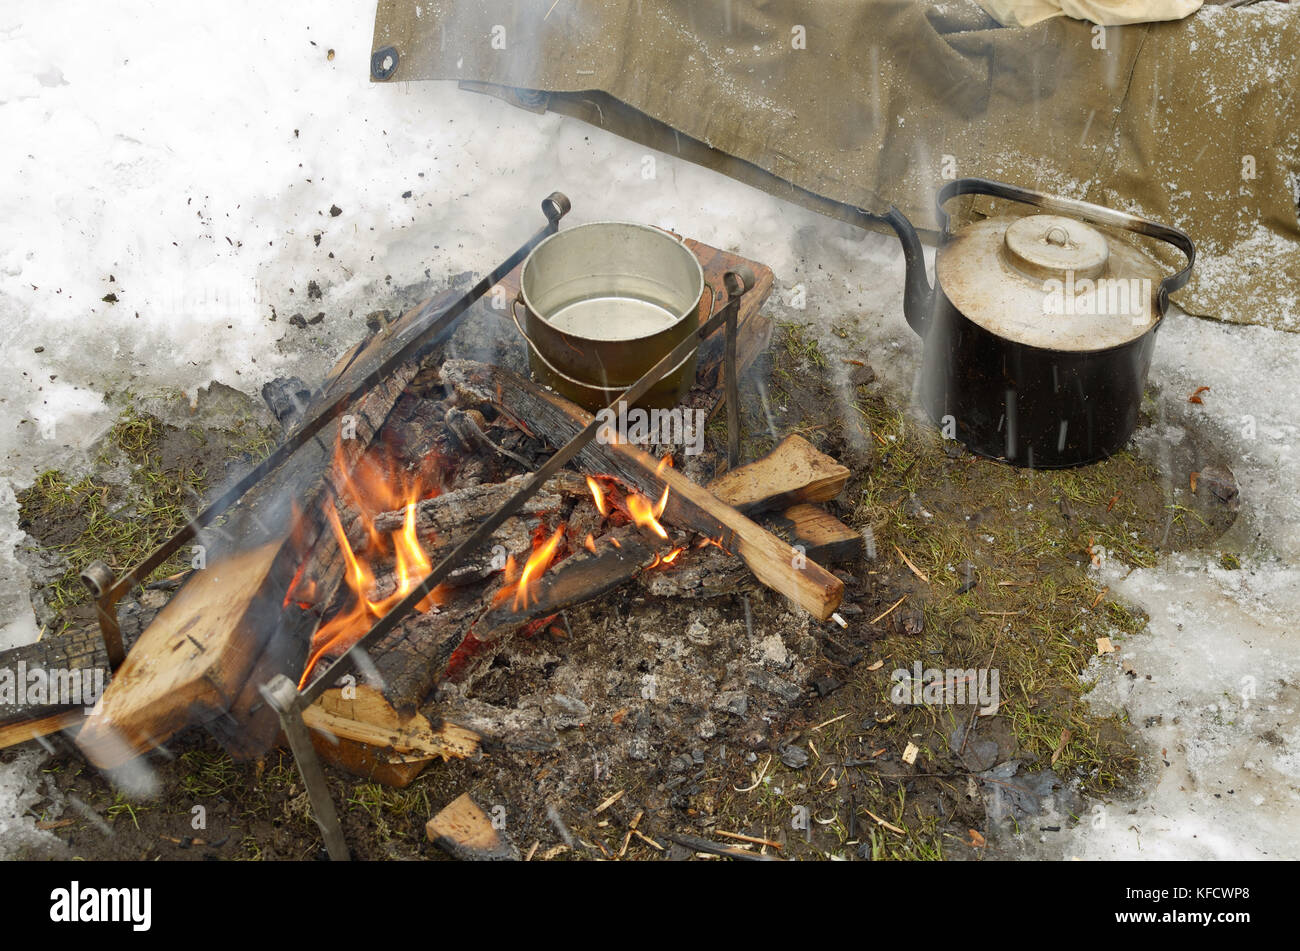 https://c8.alamy.com/comp/KFCWP8/on-the-fire-heated-water-in-a-pot-for-tea-KFCWP8.jpg